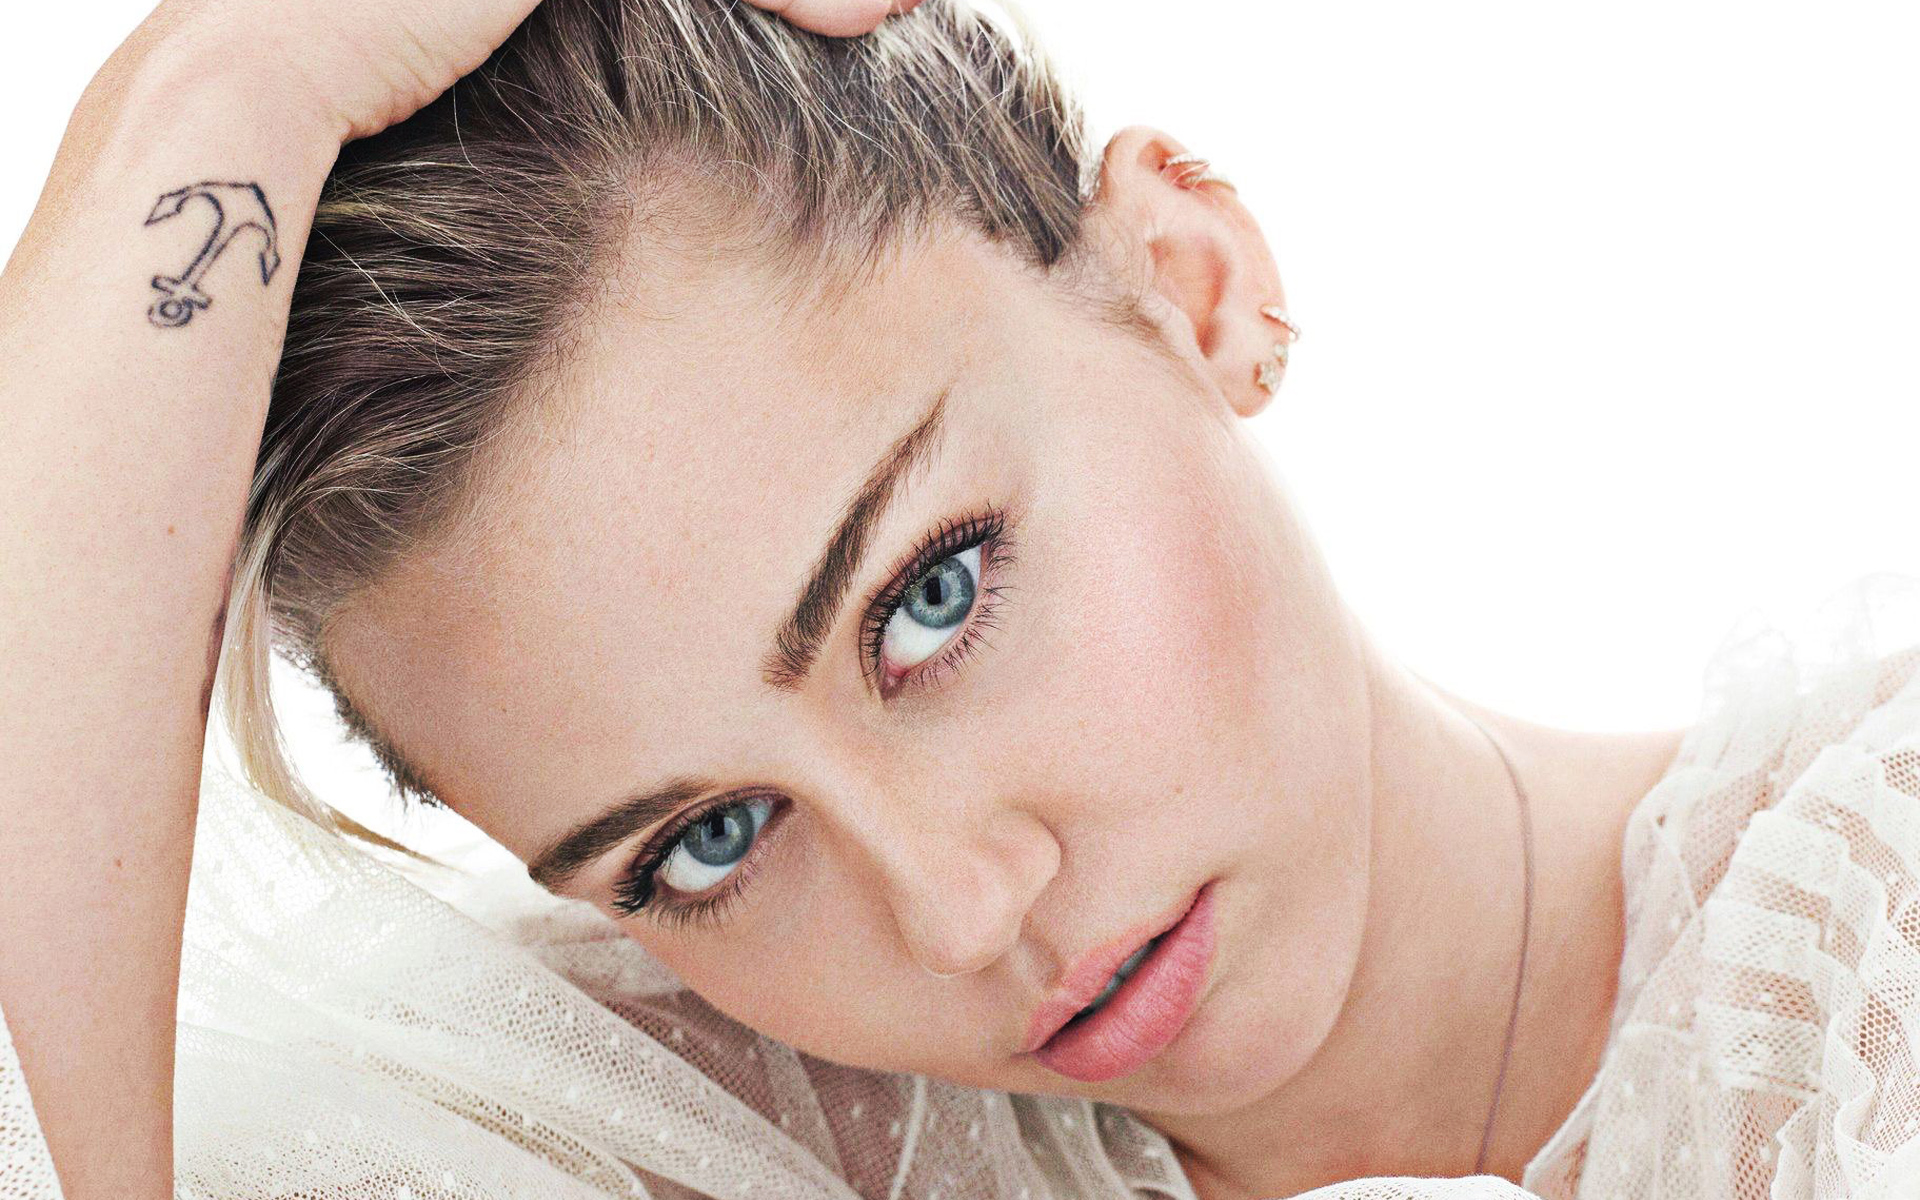 Descarga gratuita de fondo de pantalla para móvil de Música, Cantante, Cara, Ojos Azules, Americano, Miley Cyrus, Mirar Fijamente.